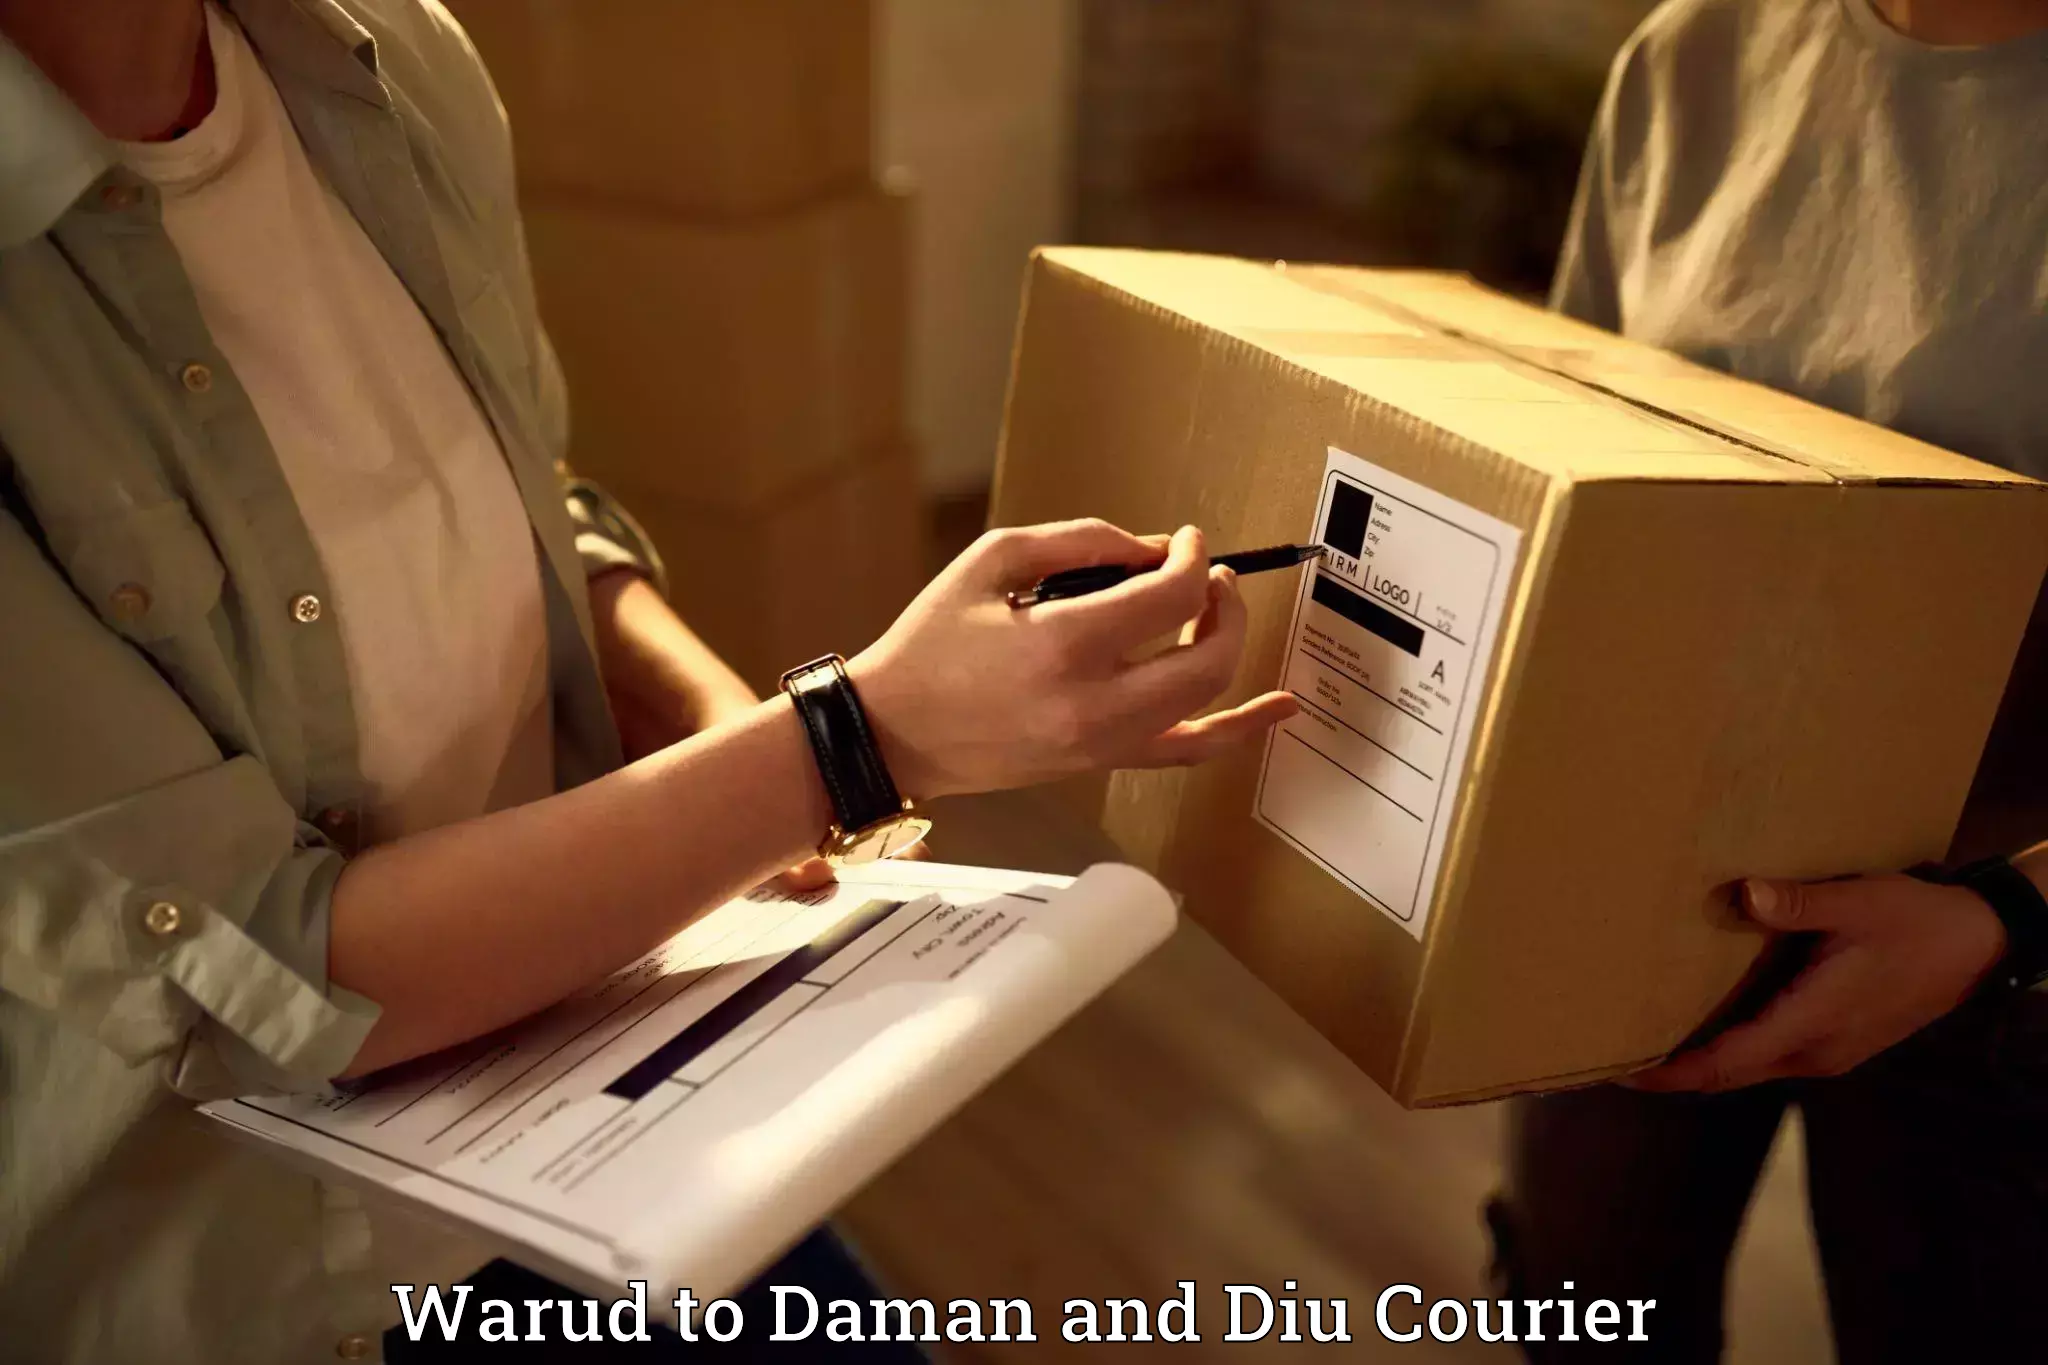 Professional moving company Warud to Daman and Diu